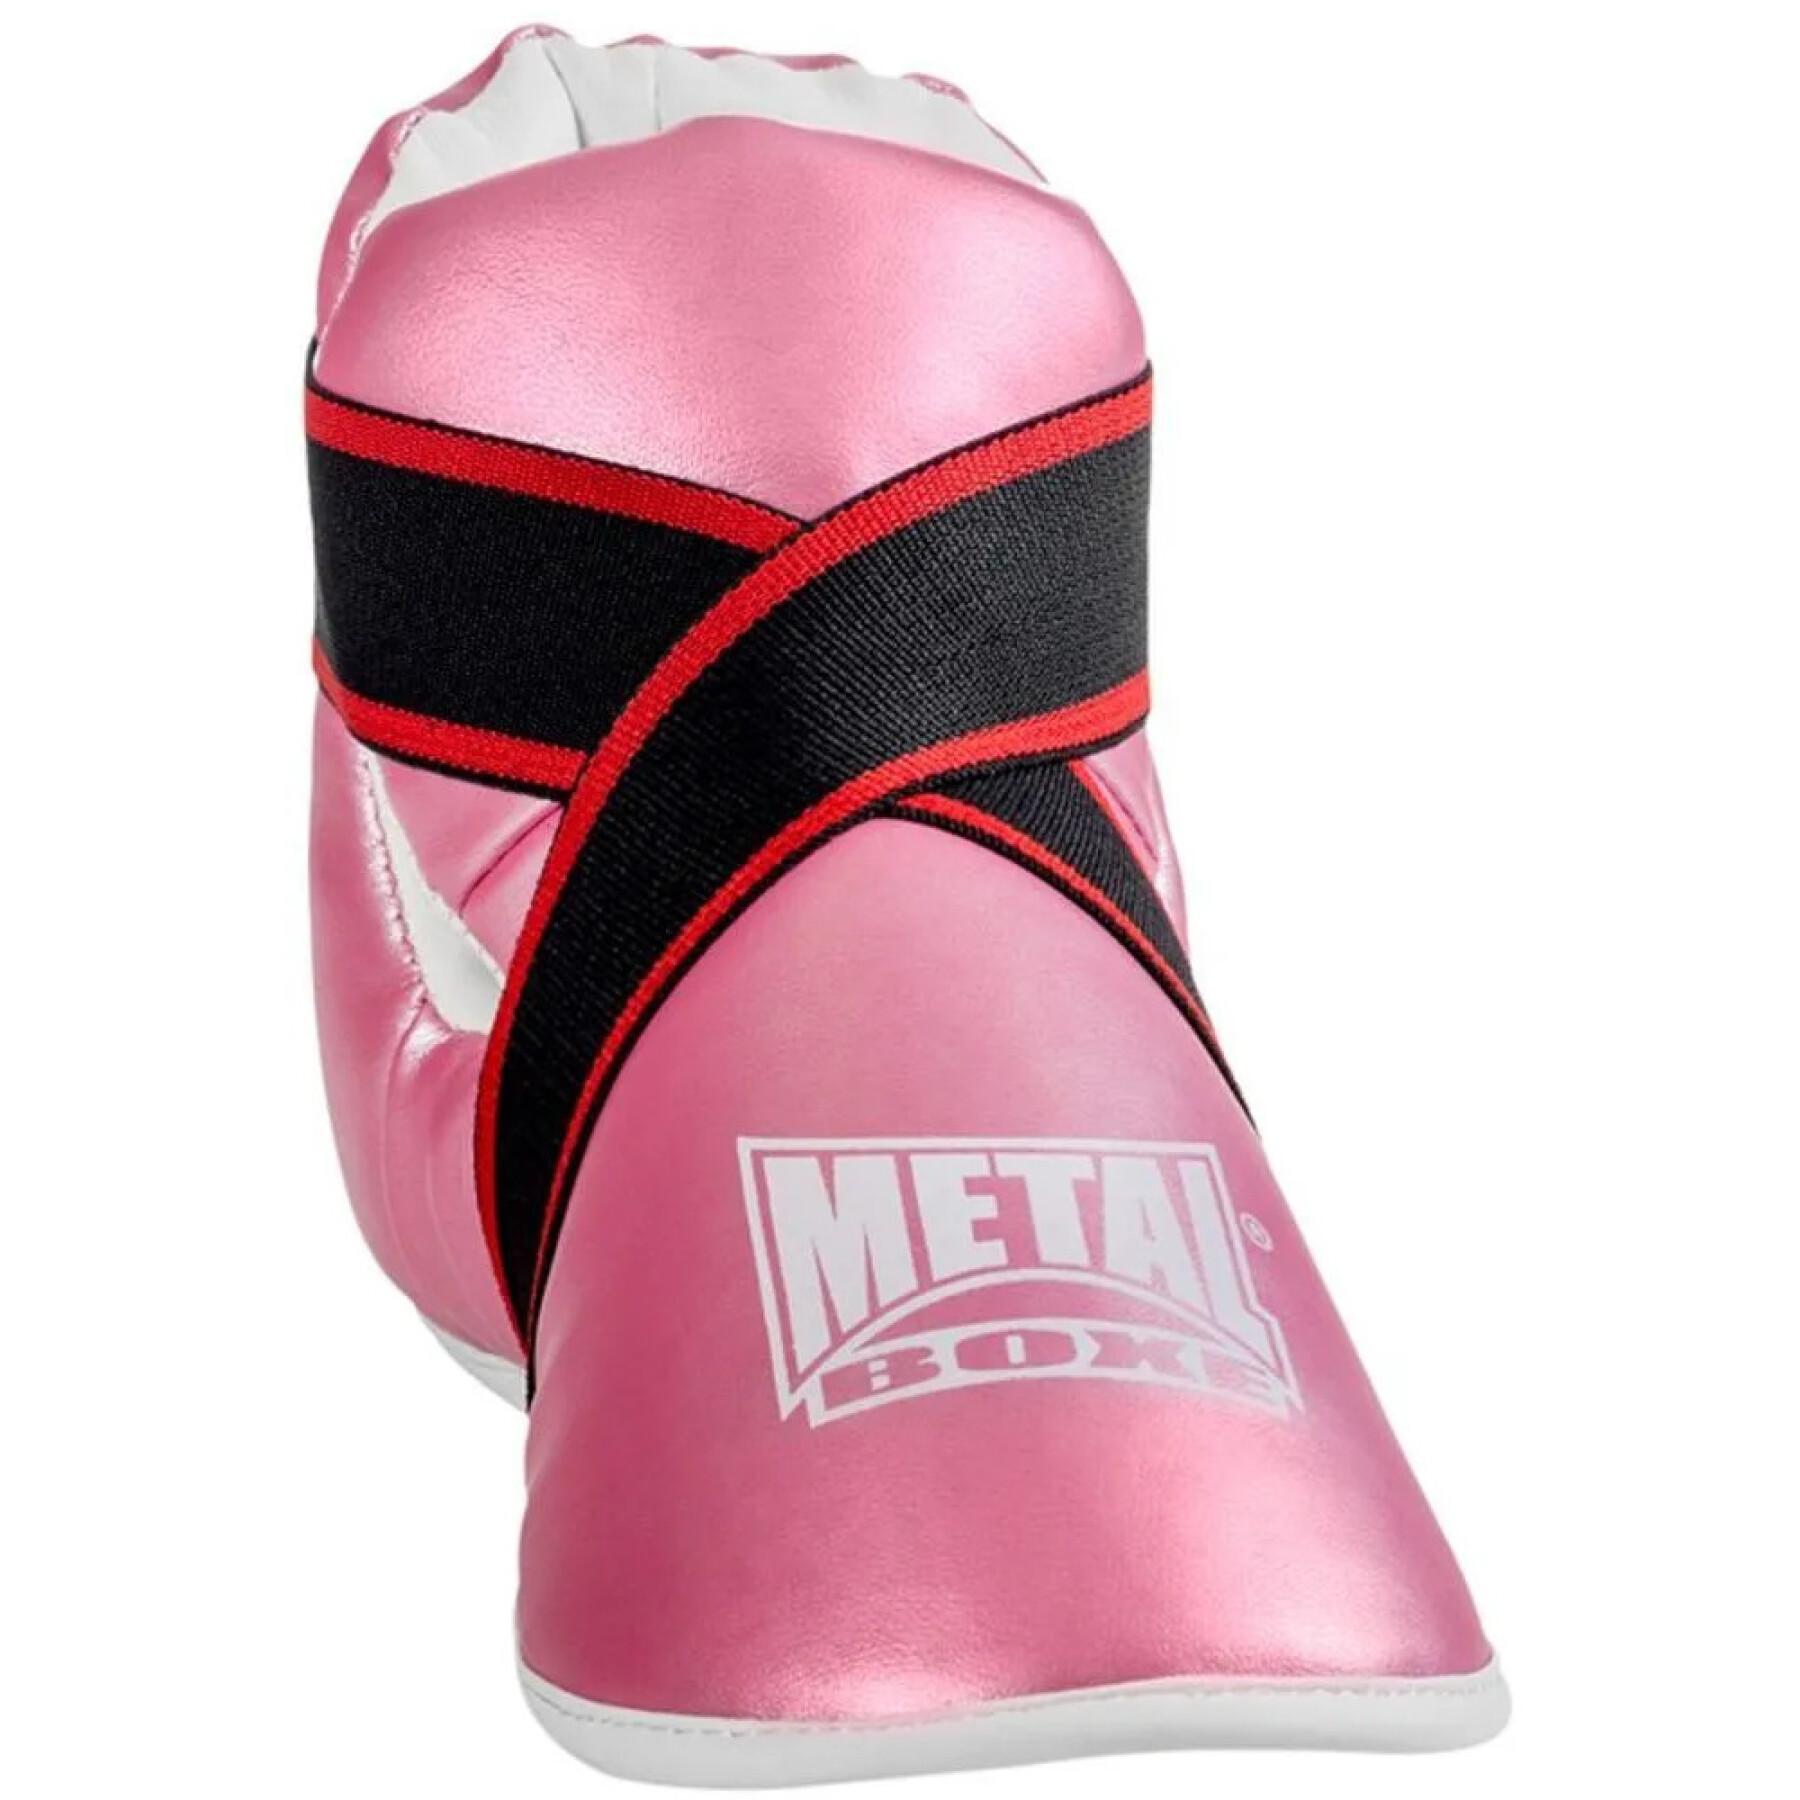 Ochrona stóp dla kobiet Metal Boxe prima